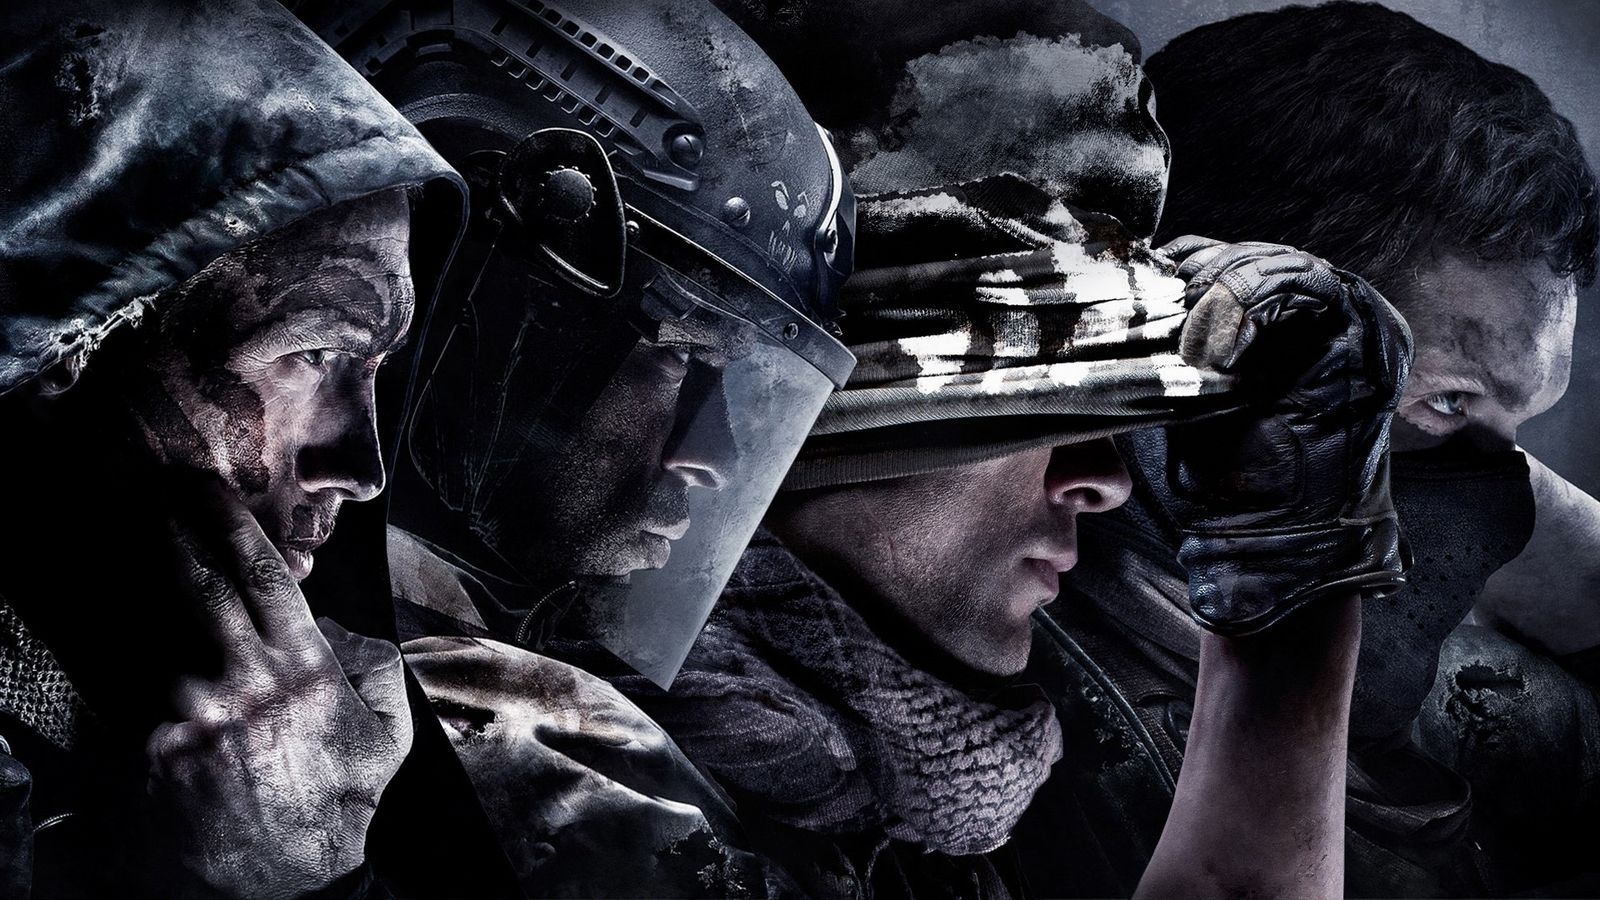  Call Of Duty Wallpaper For Desktop Background